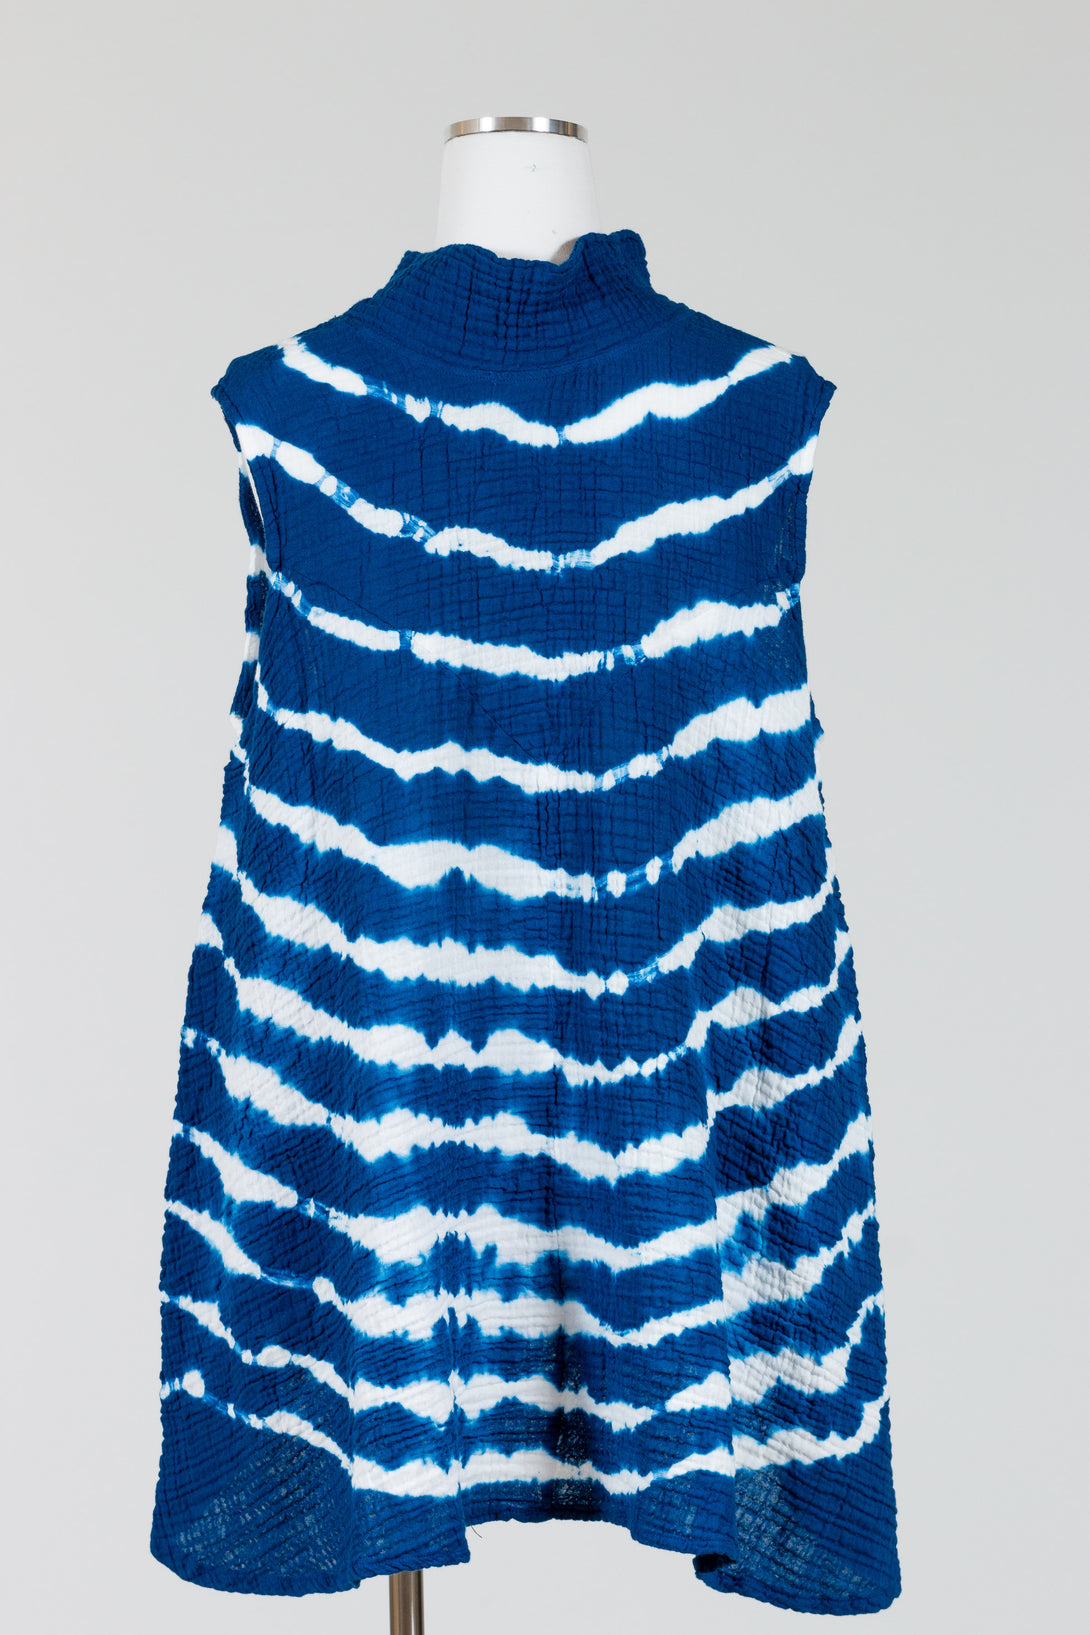 Kozan-Harlow-Tunic-Shibori-Blue-White-Stripe